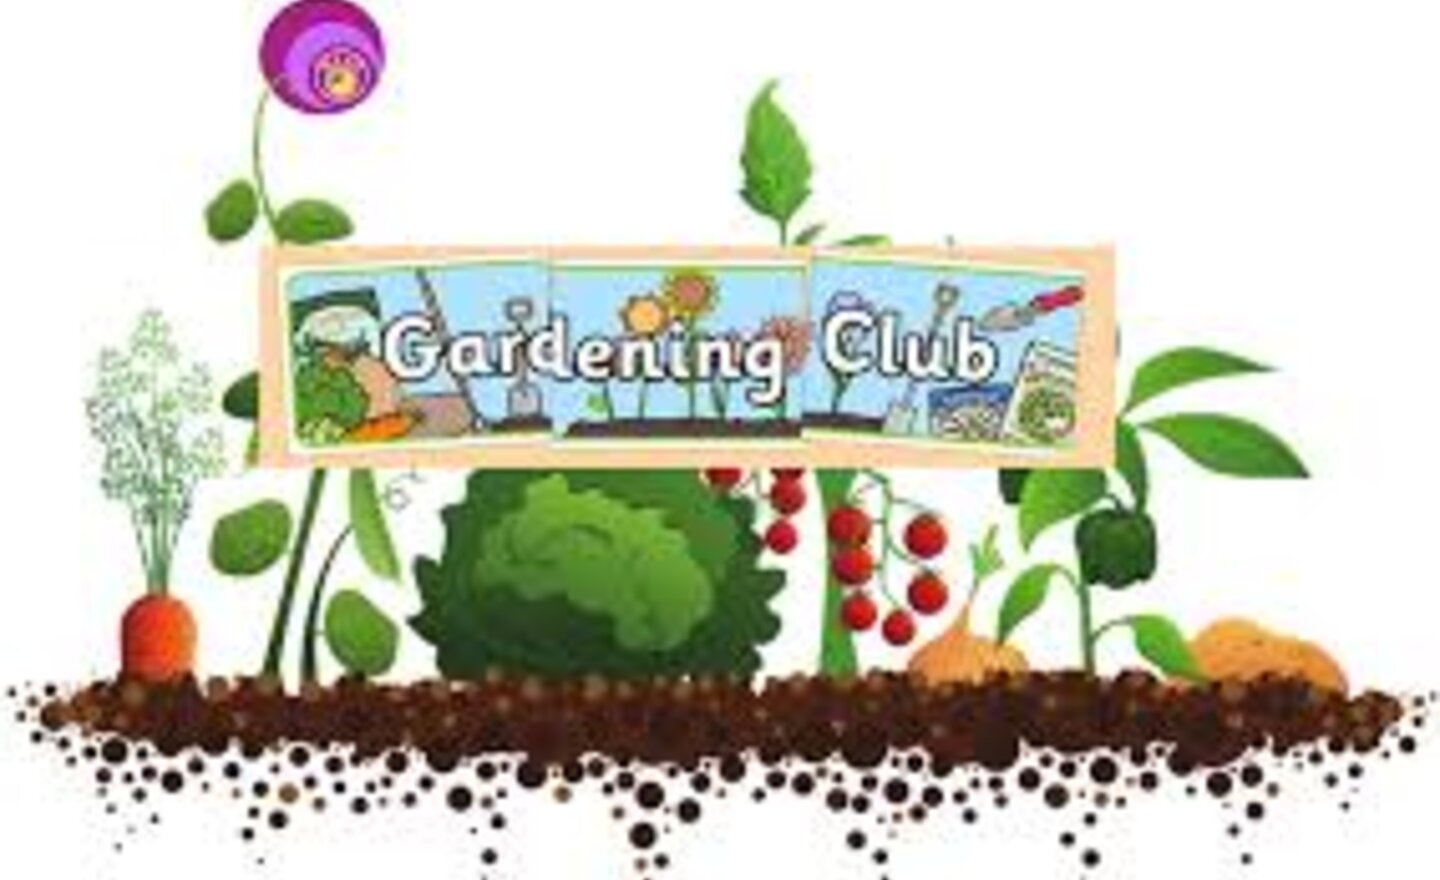 Image of Gardening club